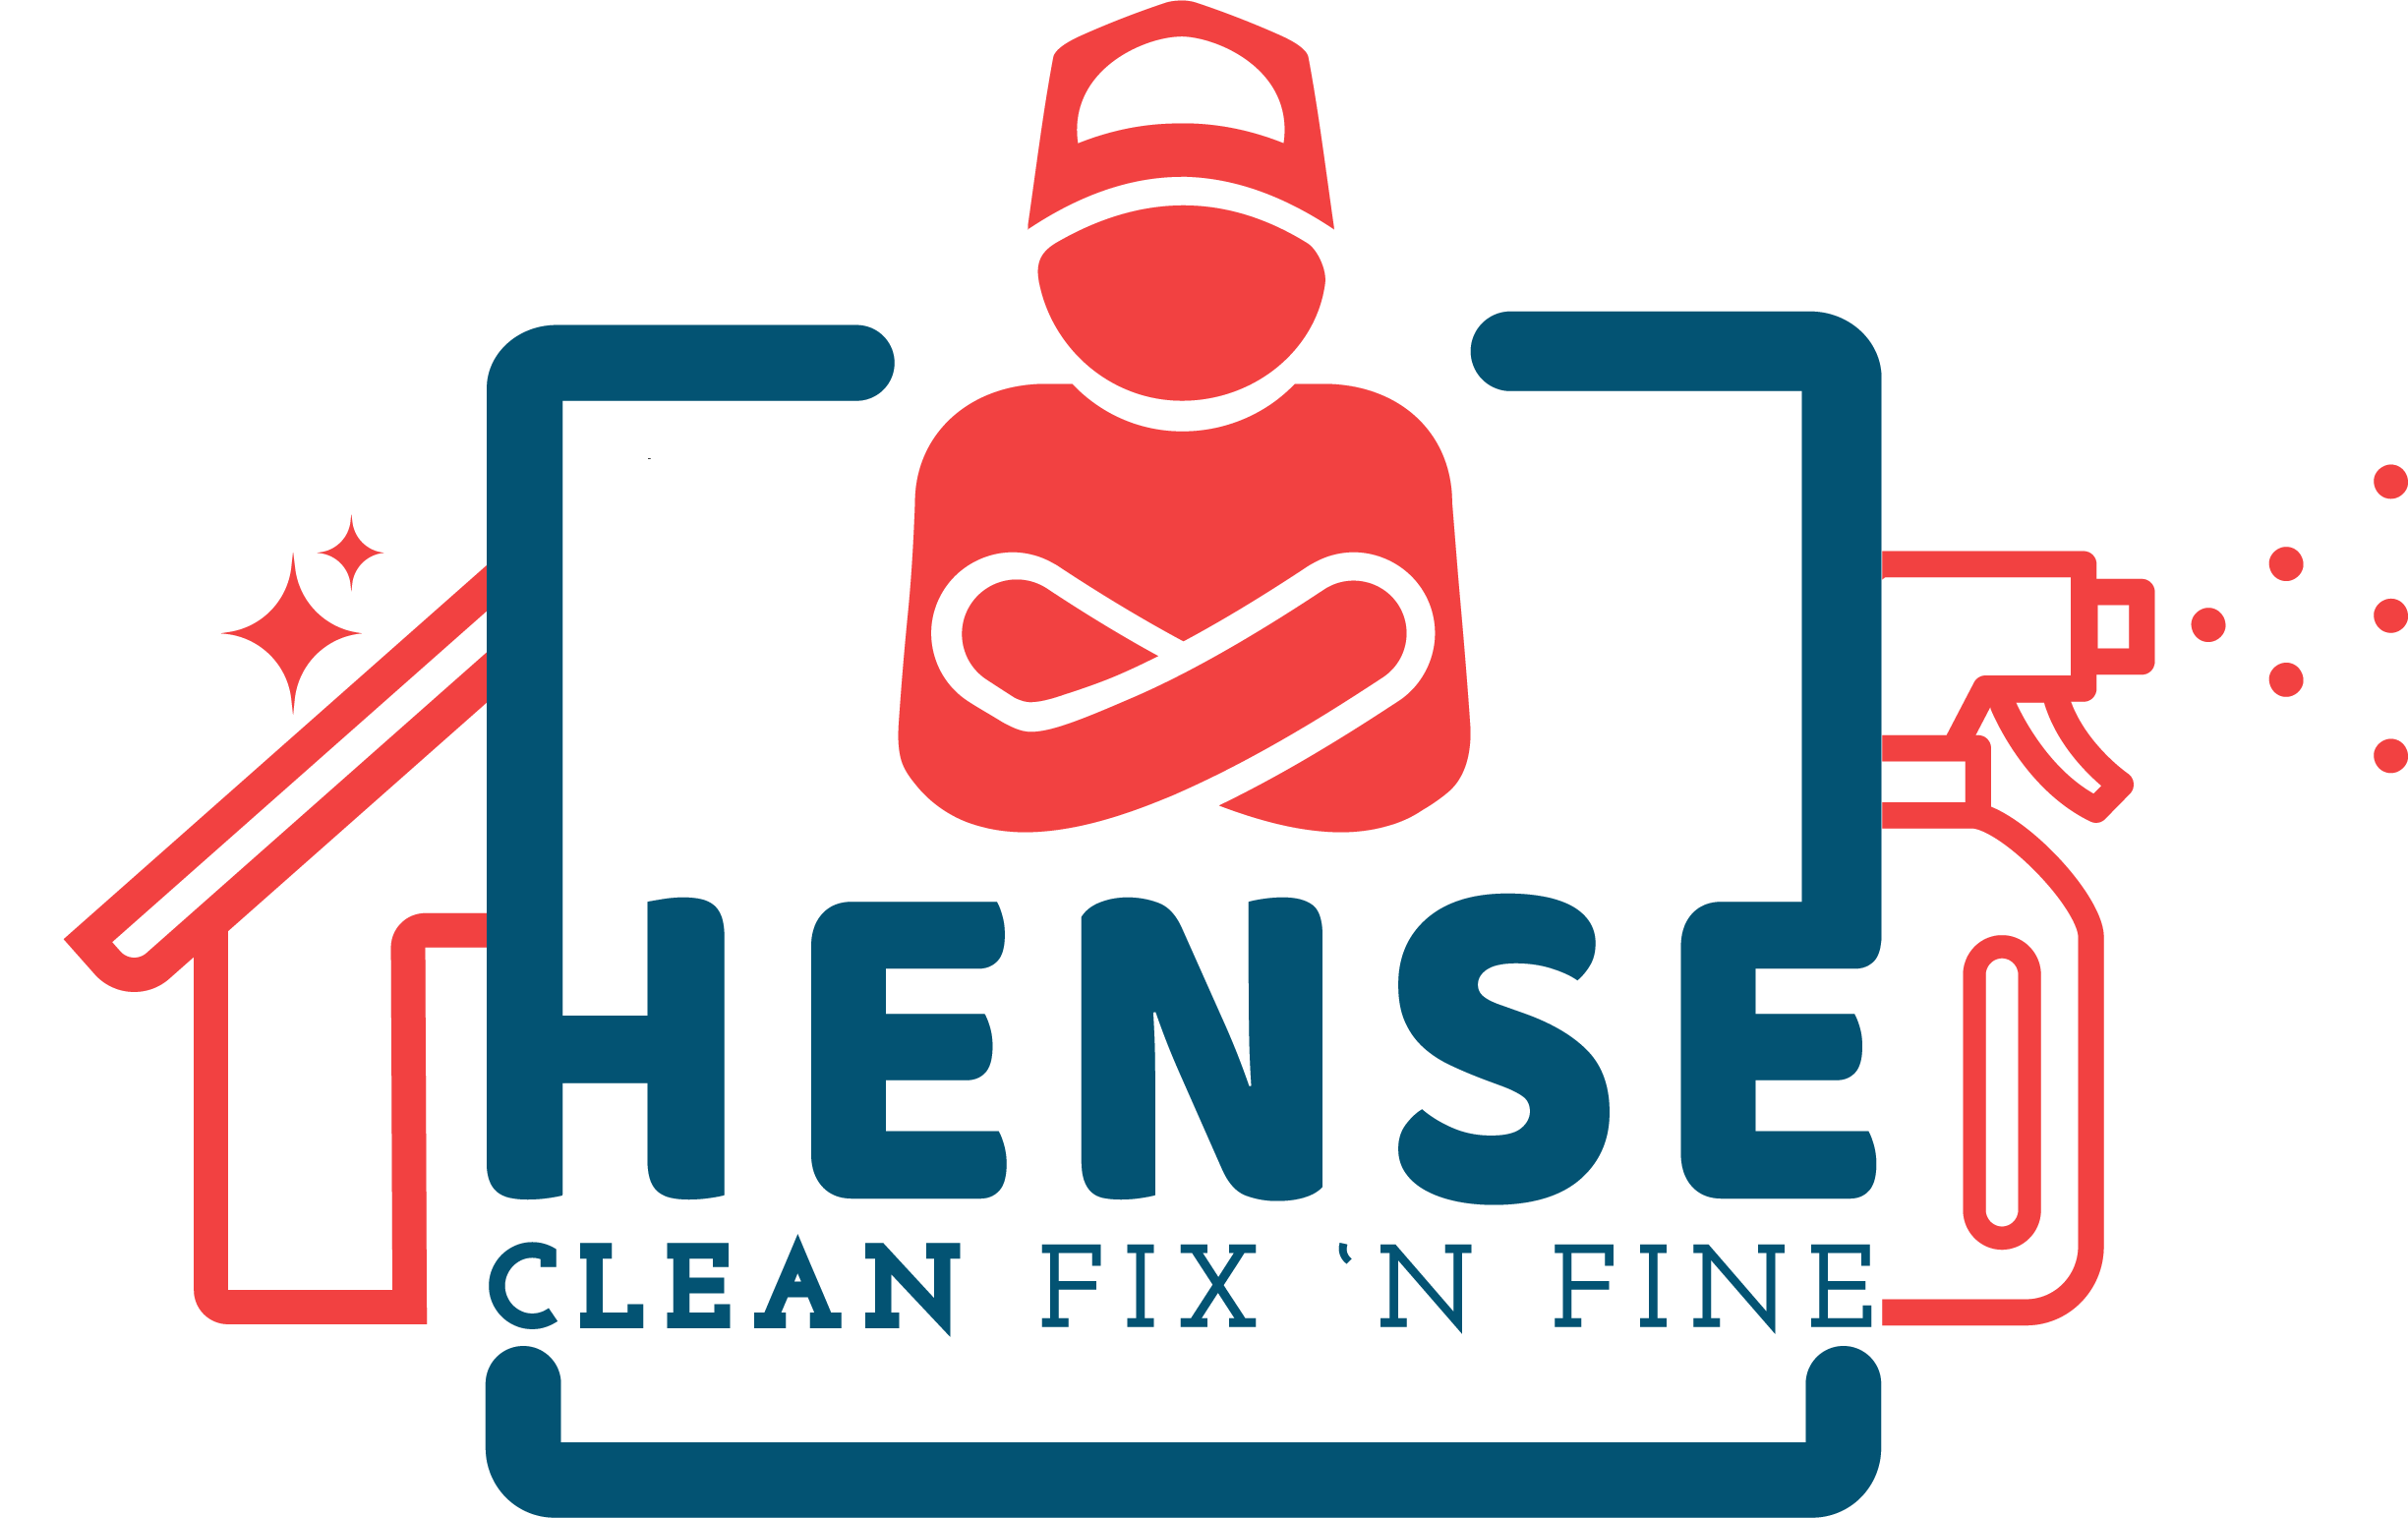 Hense – clean fix 'n fine